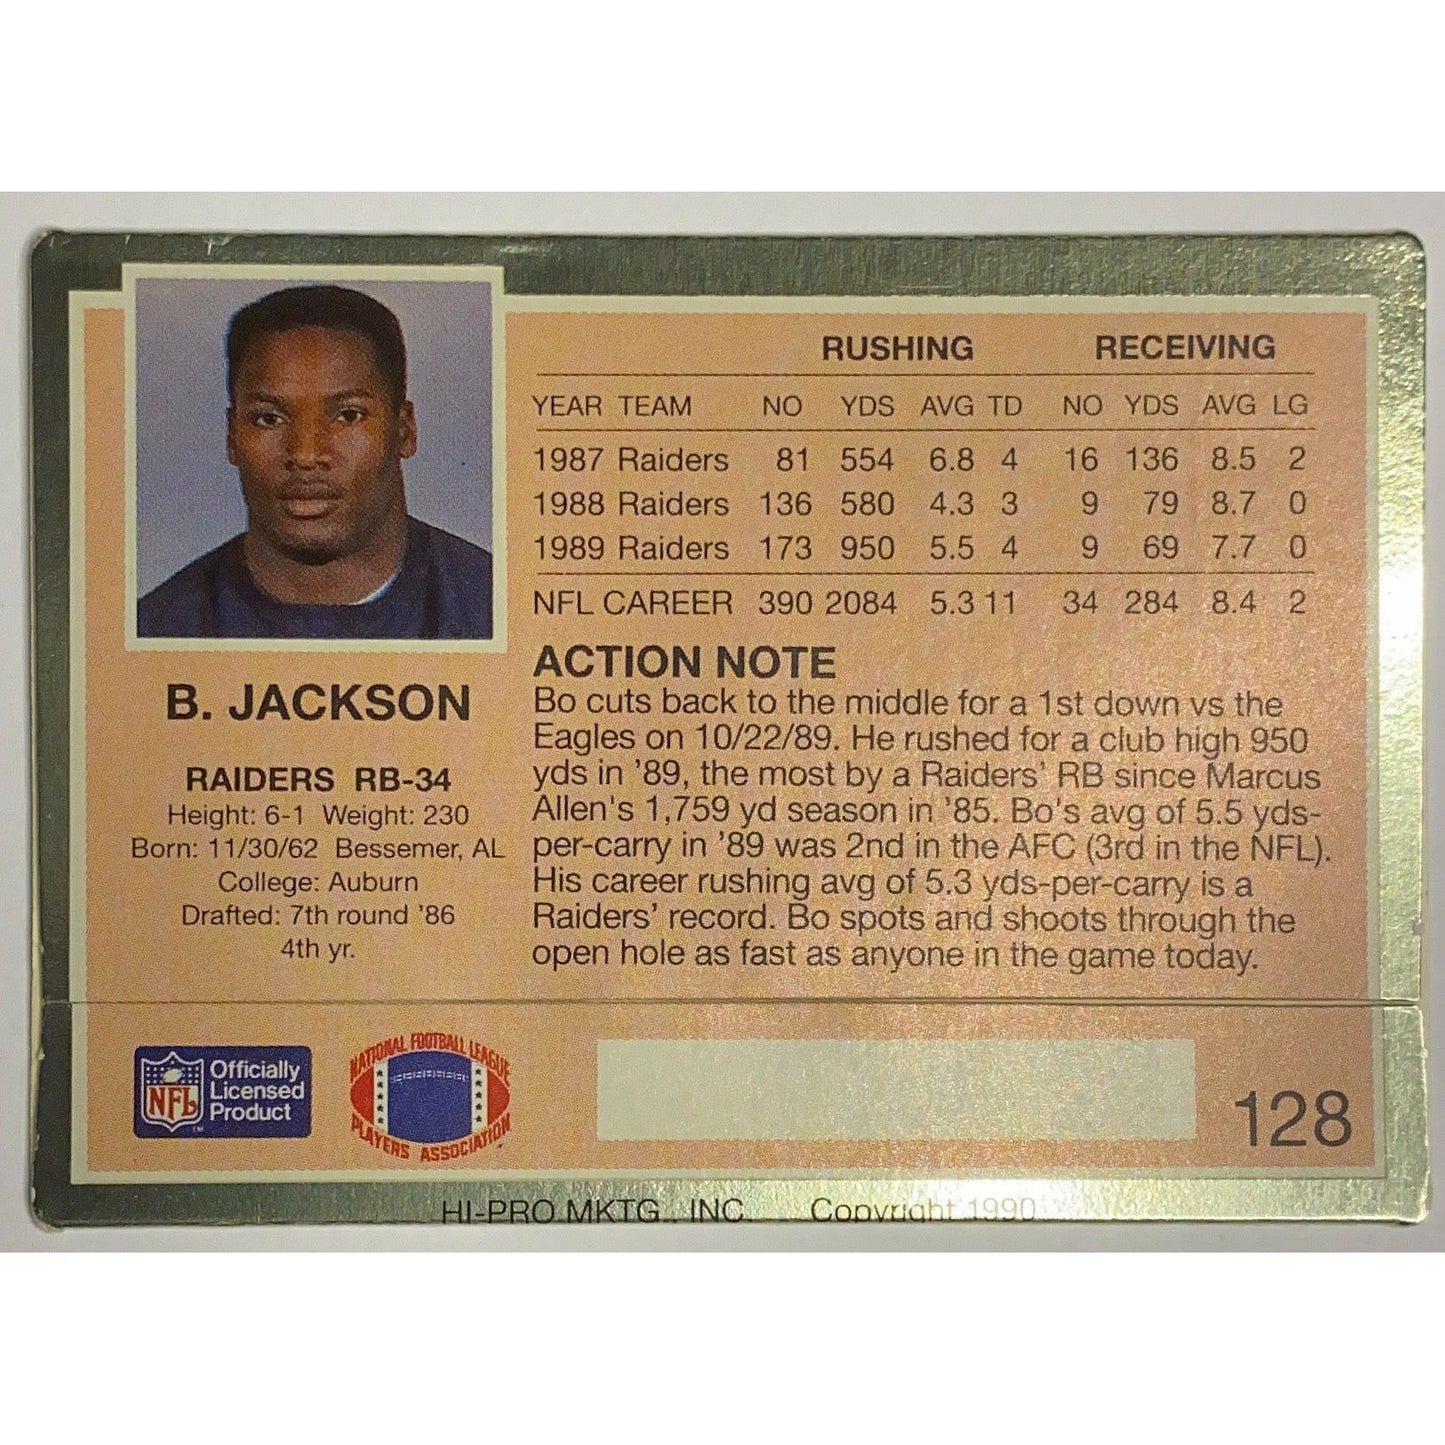 1990 Hi Pro Action Packed Bo Jackson Foil #128